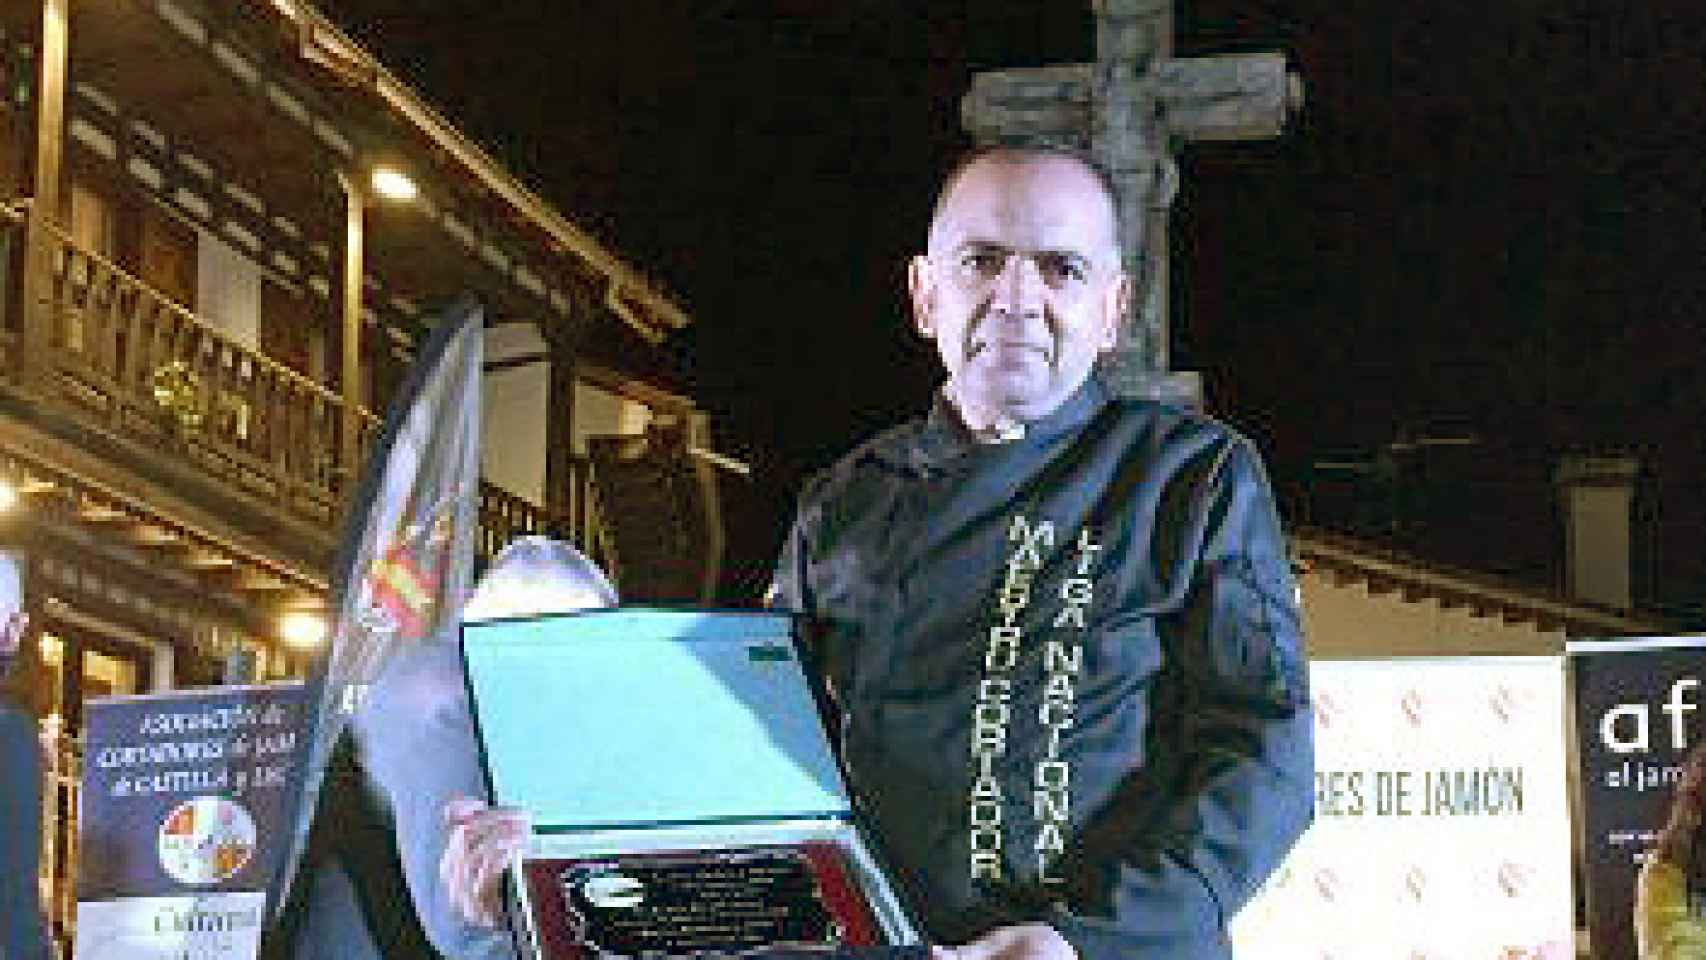 Agustín Risueño, nombrado maestro cortador en la Liga Nacional de Cortadores de Jamón